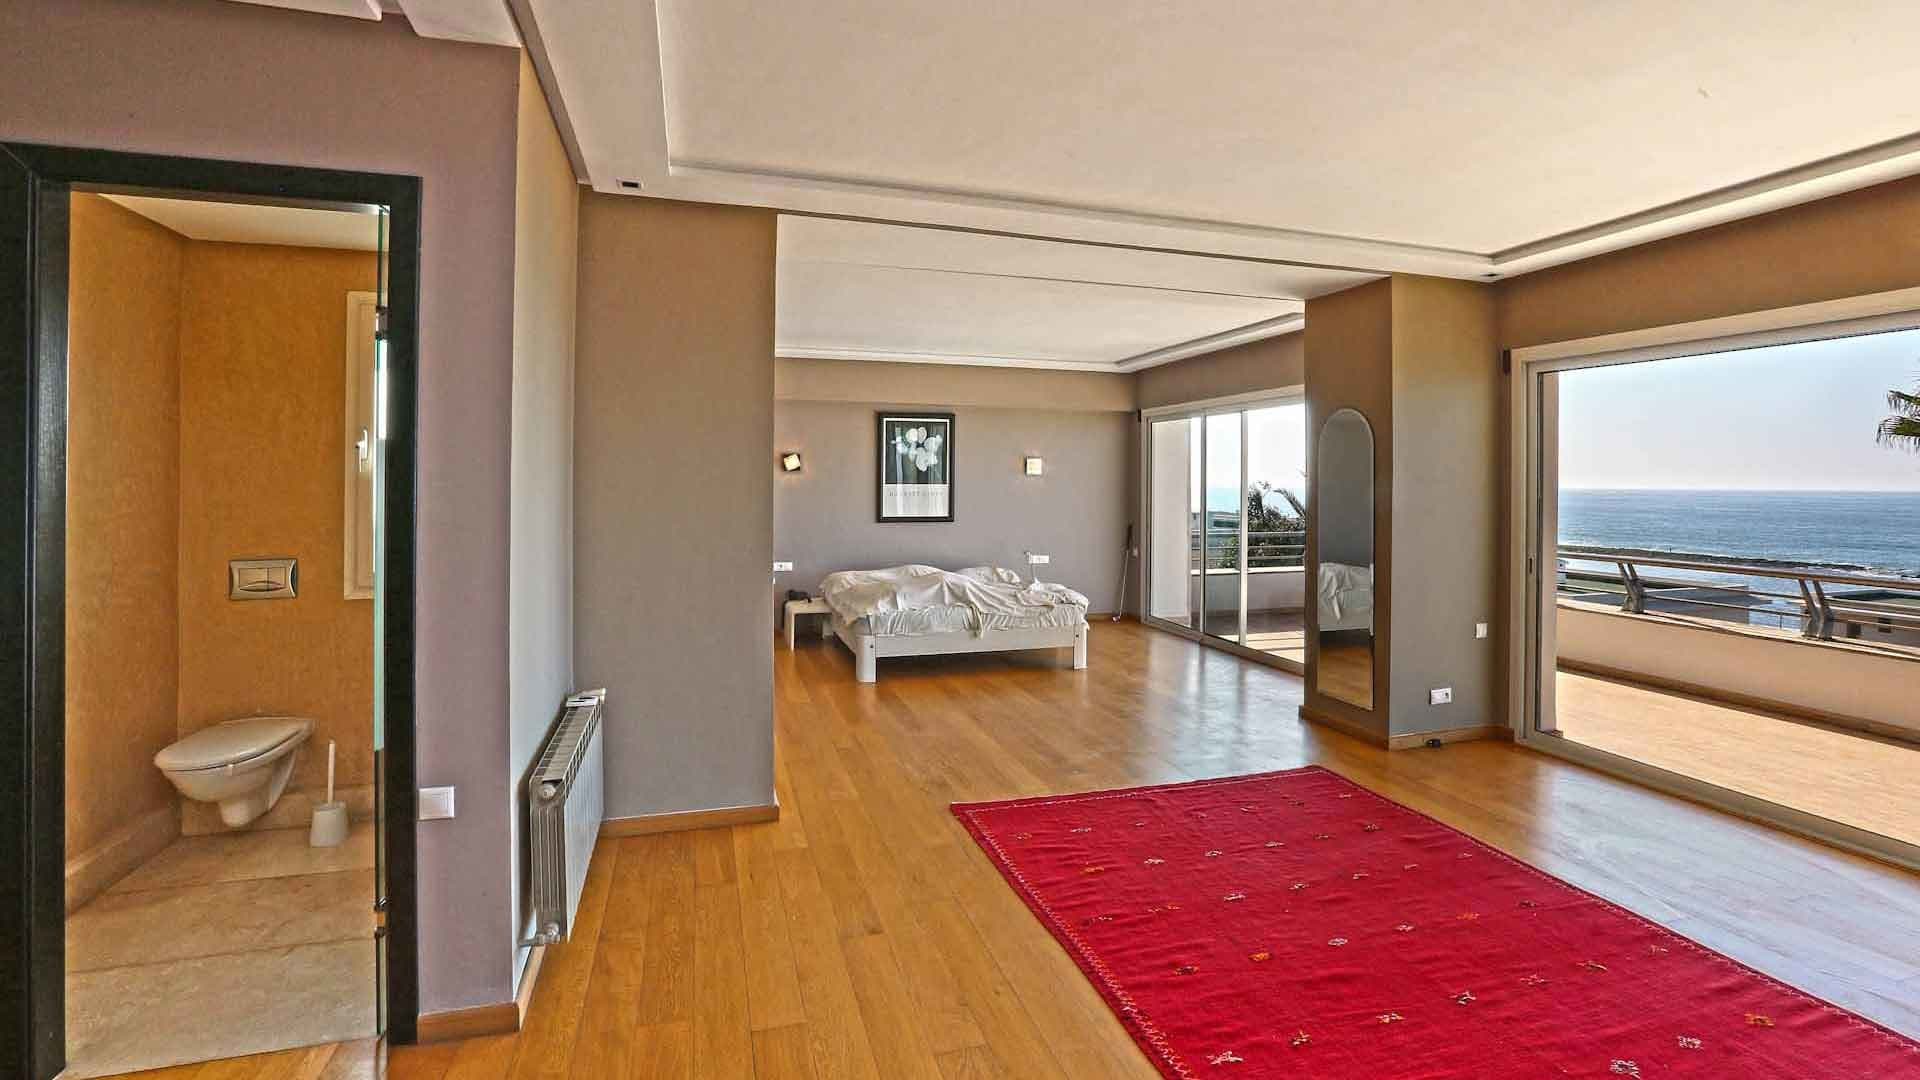 4 Bedroom Villa For Sale Marrakech Lp08710 156d461ac351cb0.jpg